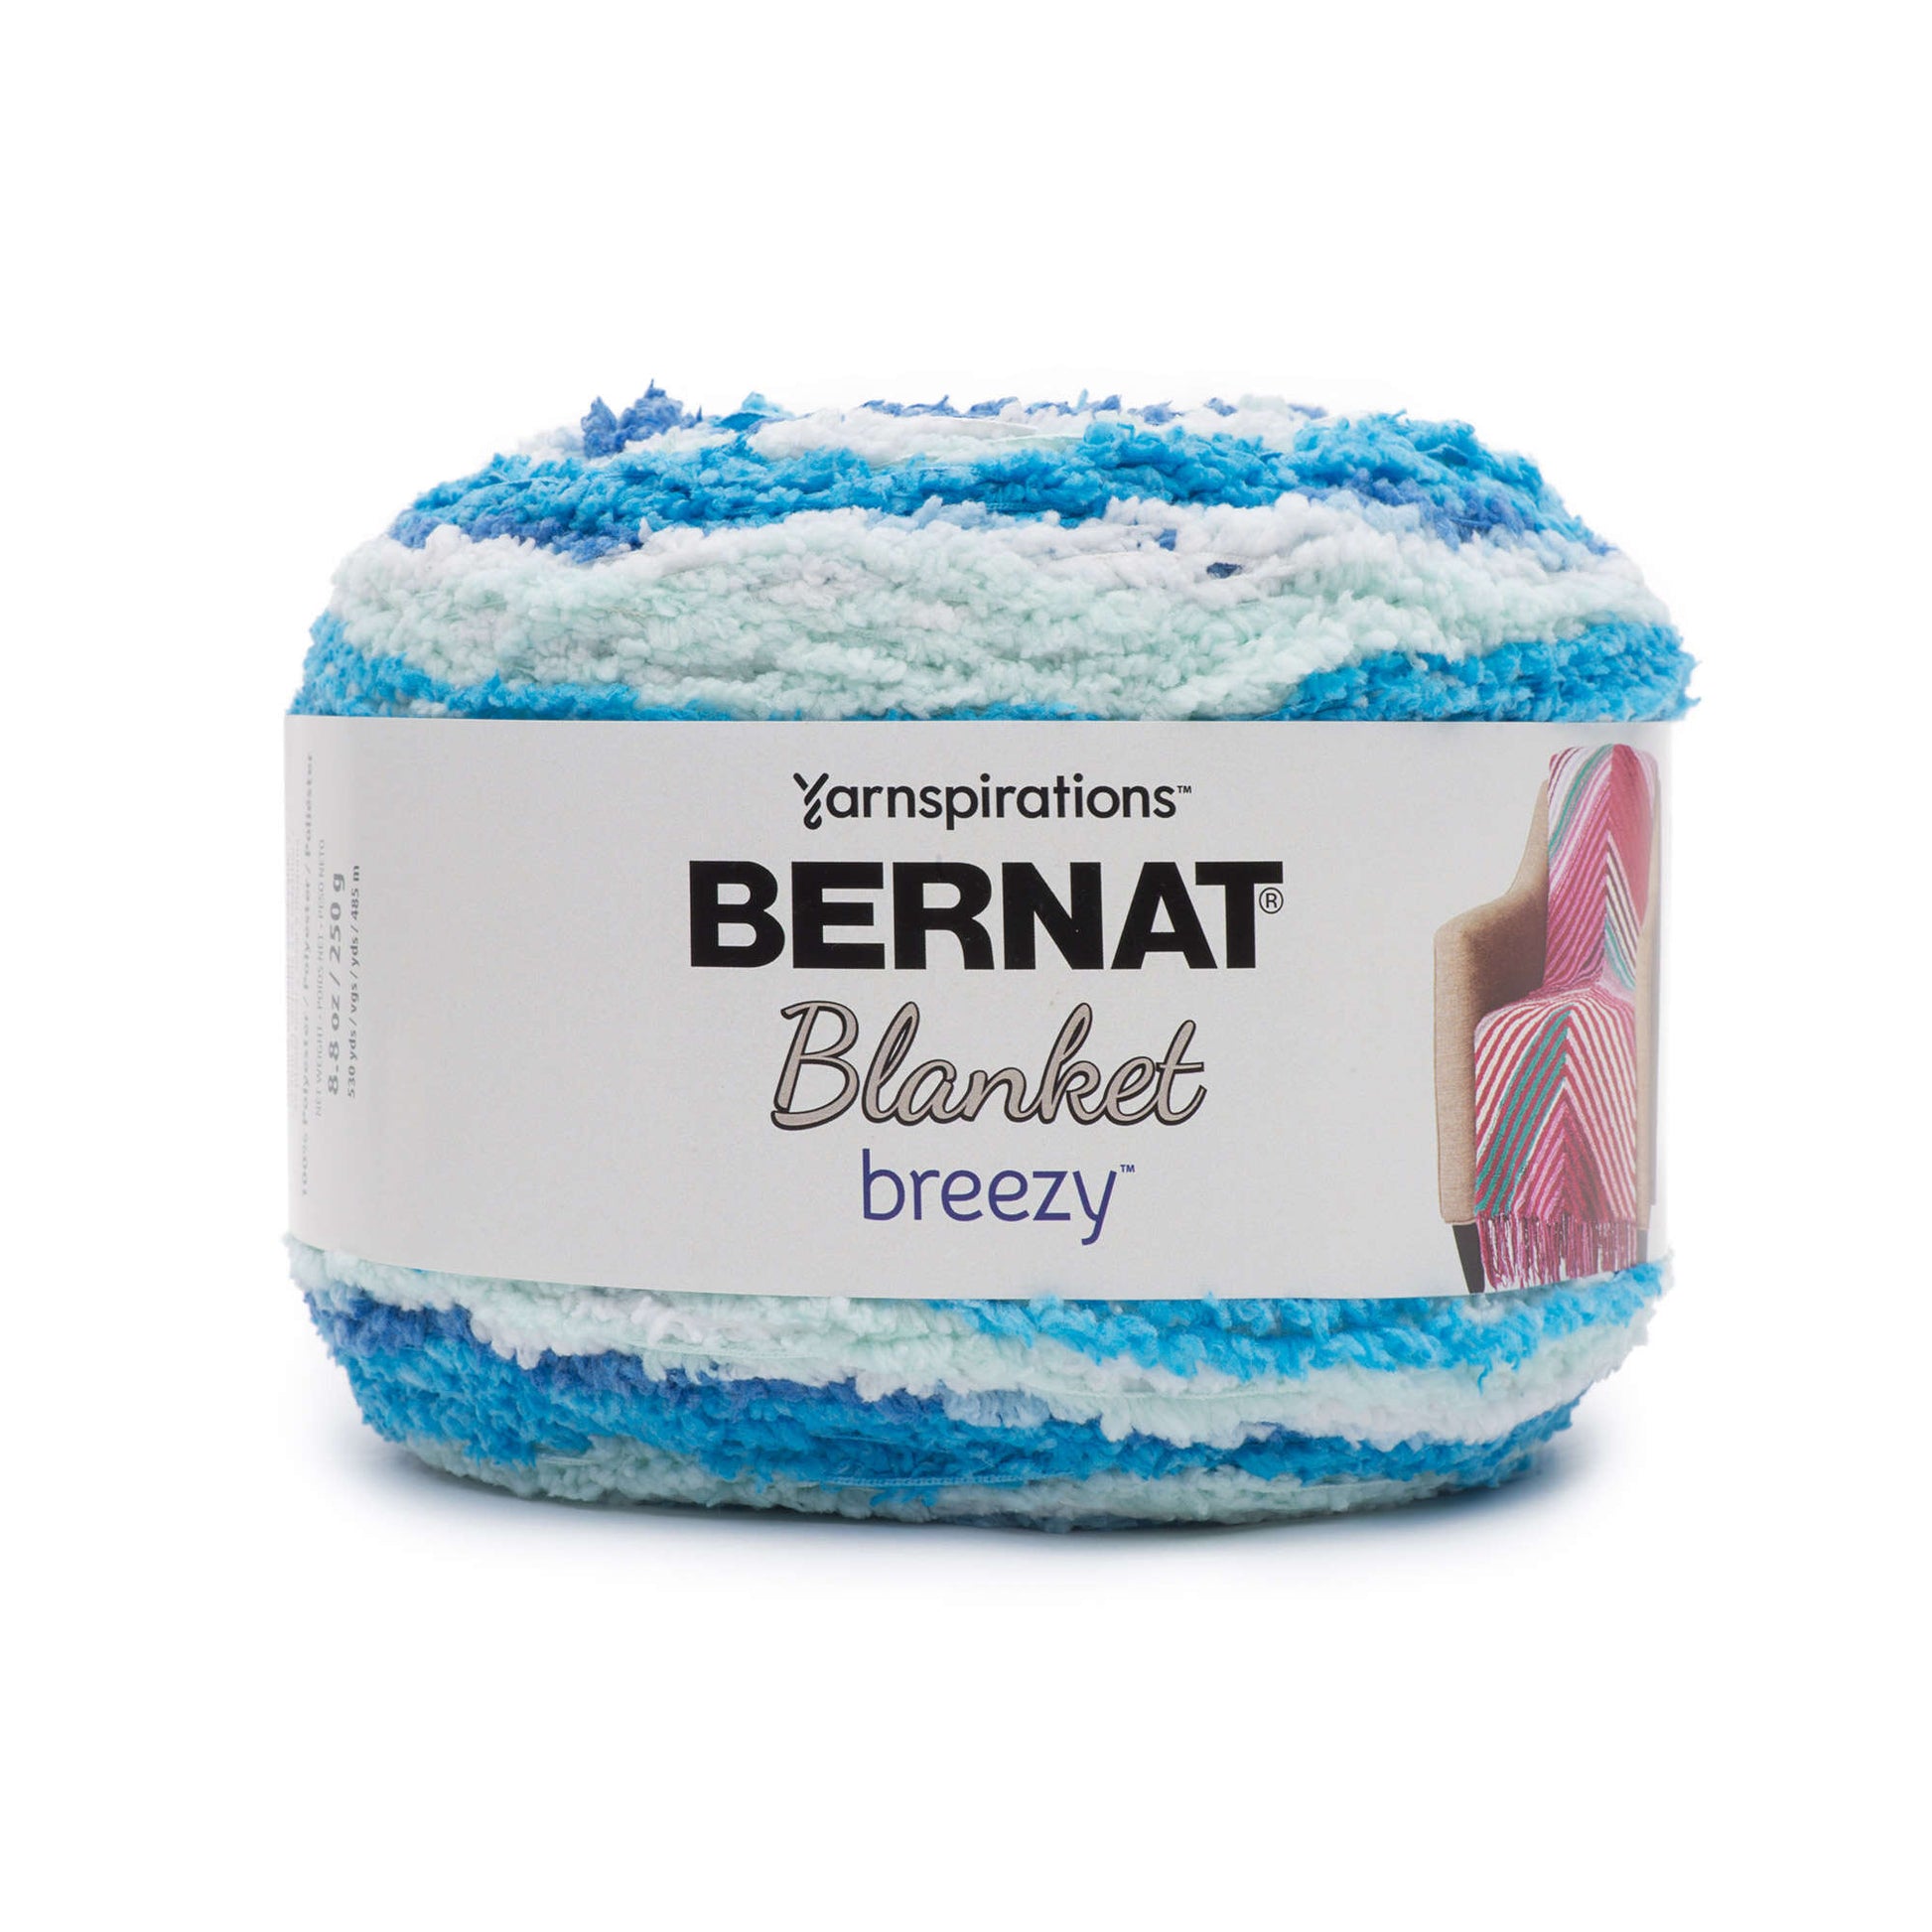 Bernat Blanket Breezy Yarn - Discontinued Shades